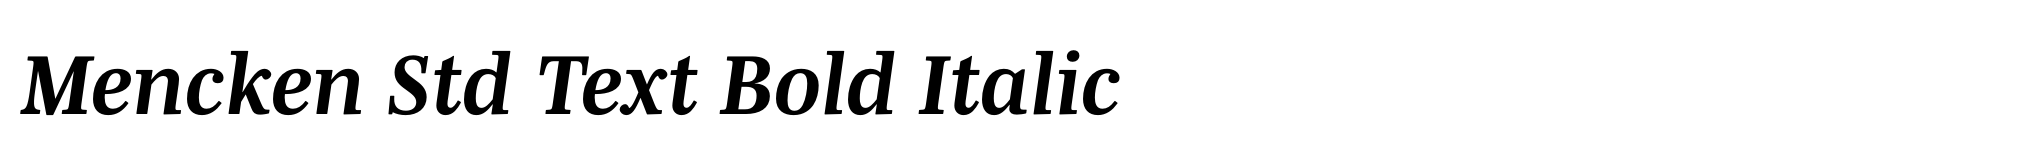 Mencken Std Text Bold Italic image